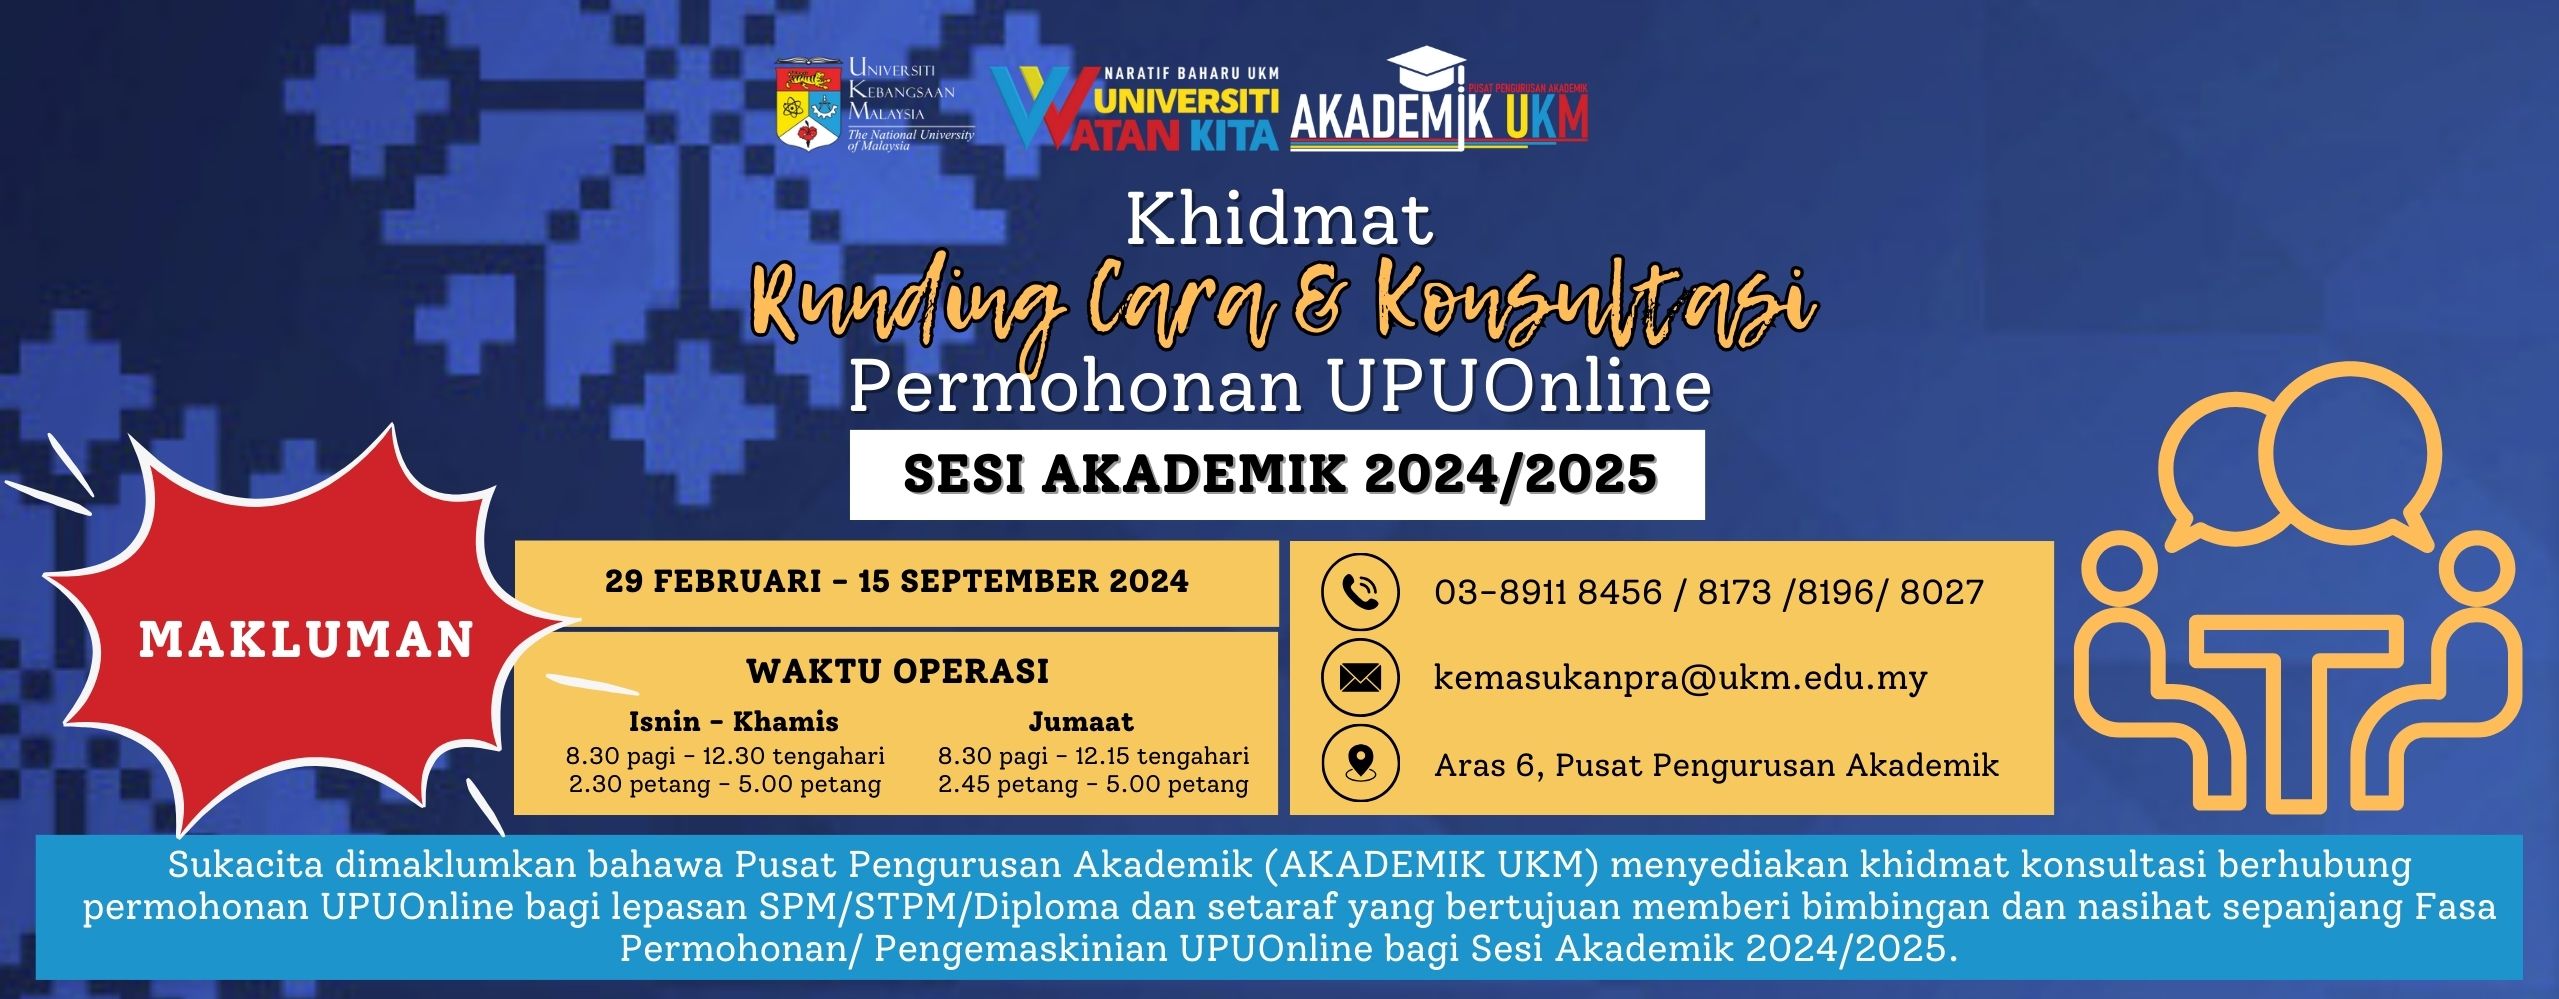 Khidmat Runding Cara & Konsultasi Permohonan UPU Online bagi Sesi Akademik 20242025